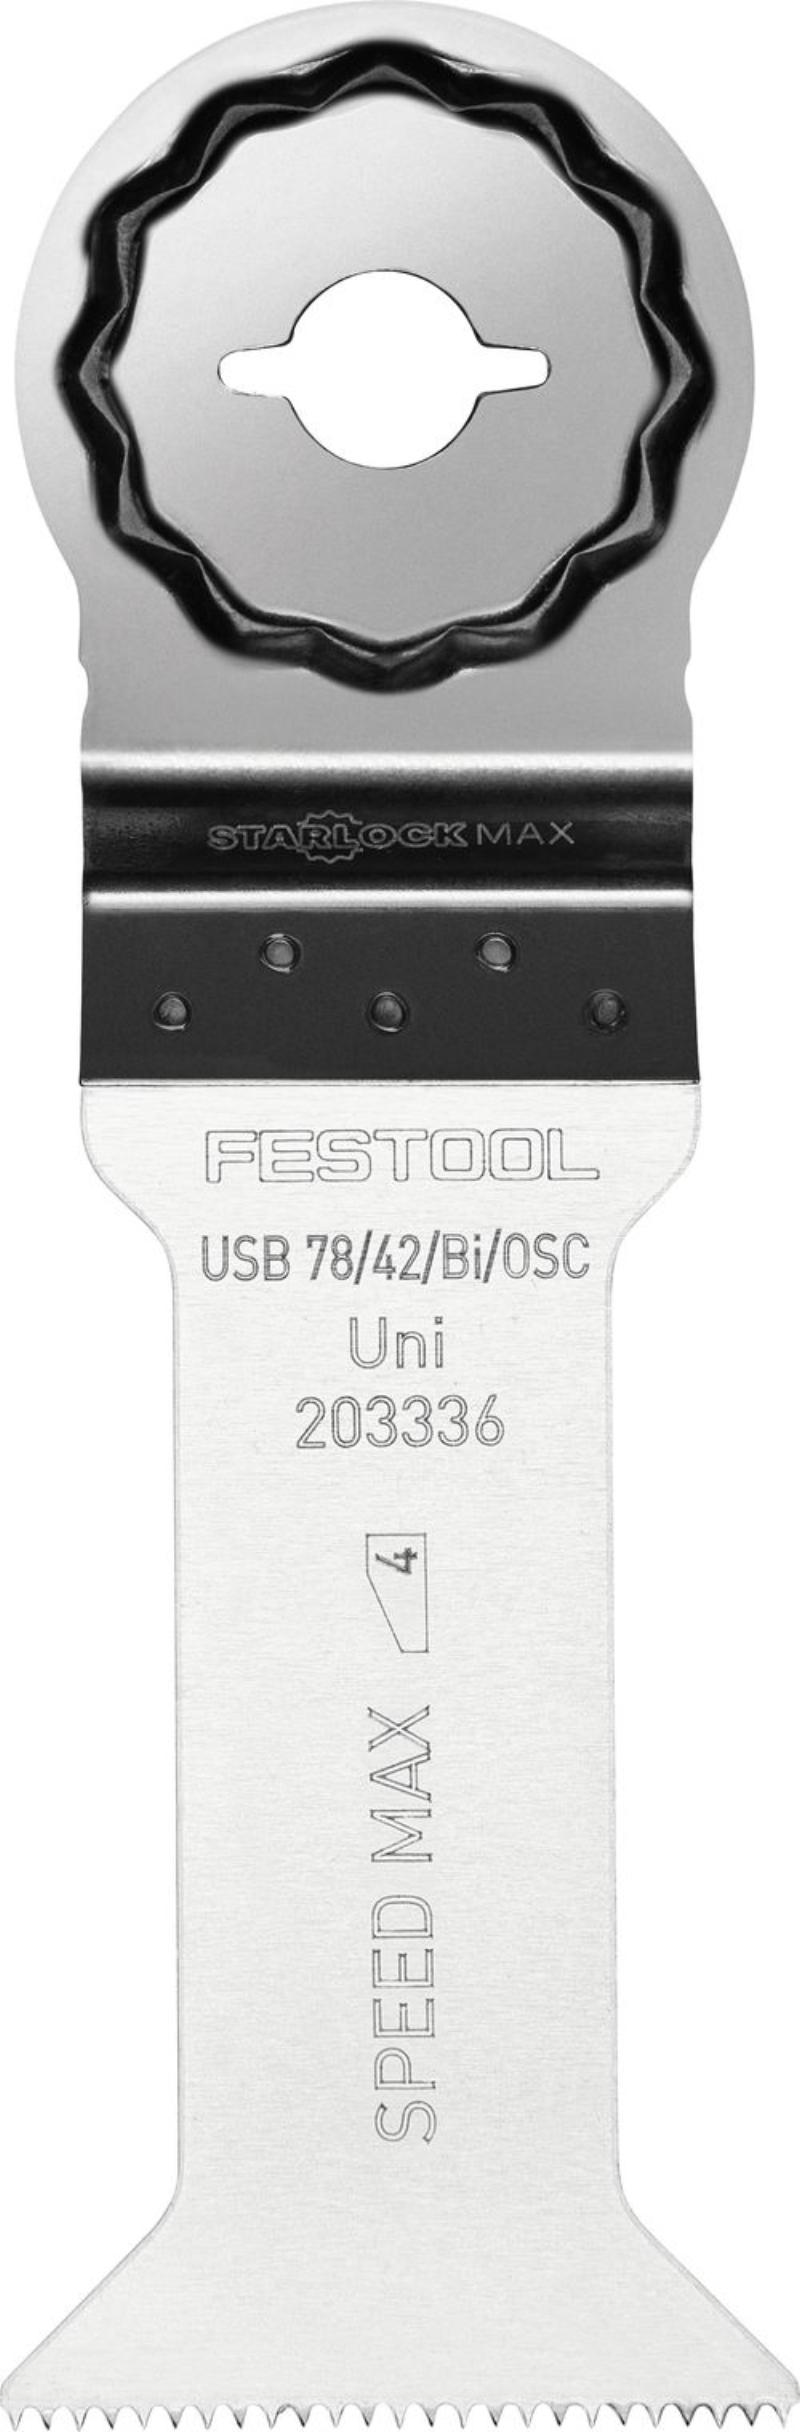 Festool Universal saw blade USB 78/42/Bi/OSC, 1 pc